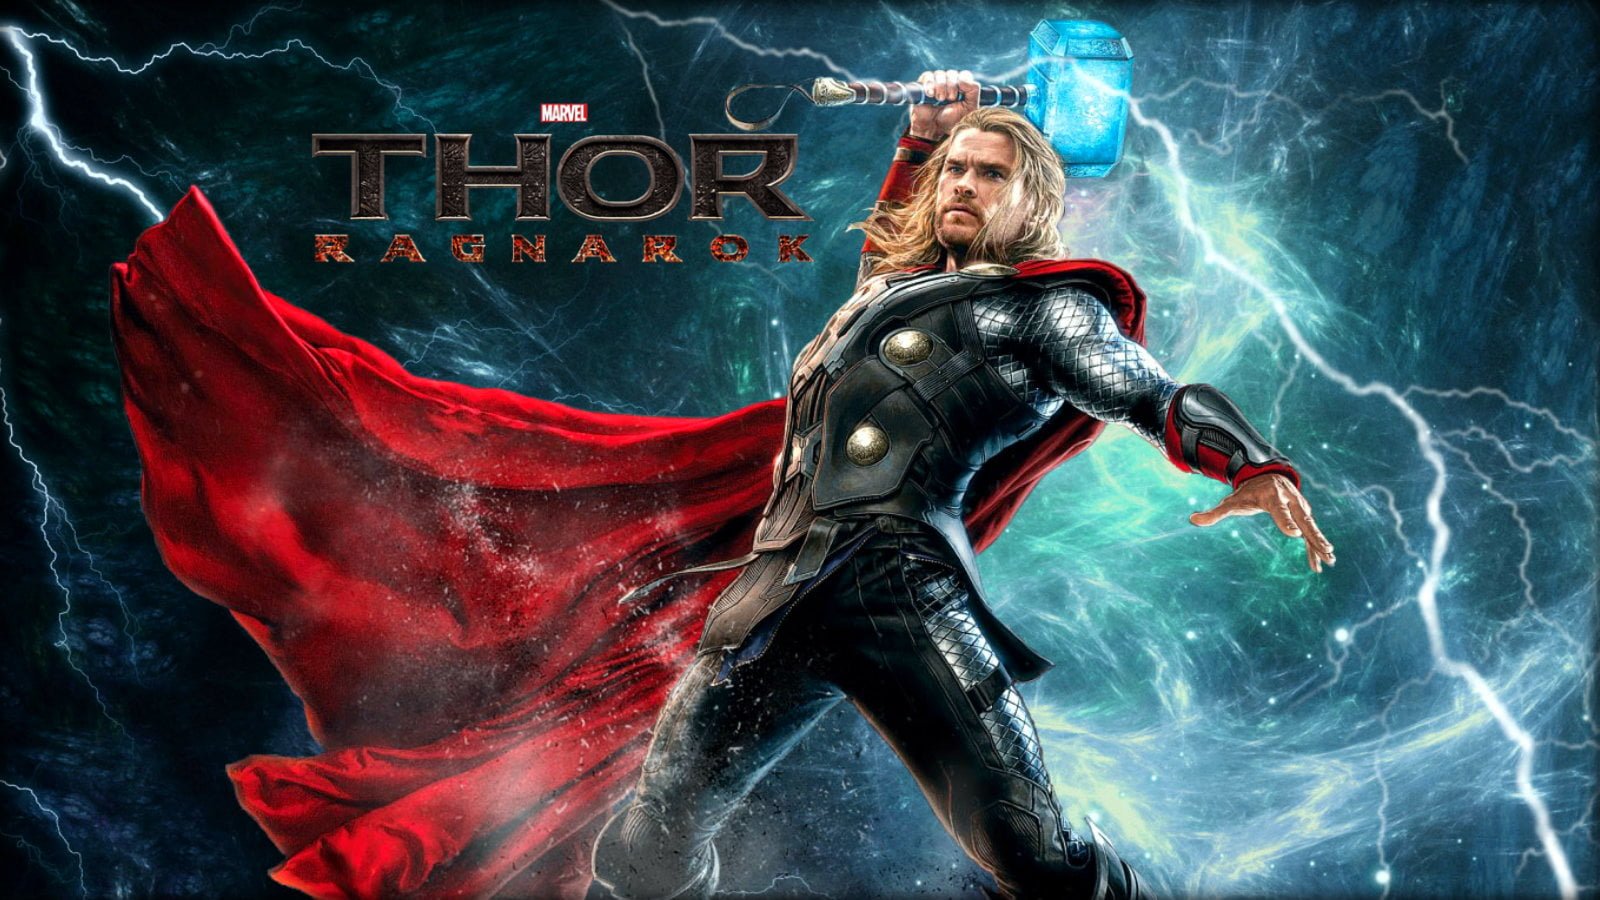 Thor-Ragnar-k-thor-ragnarok-39561528-1600-900